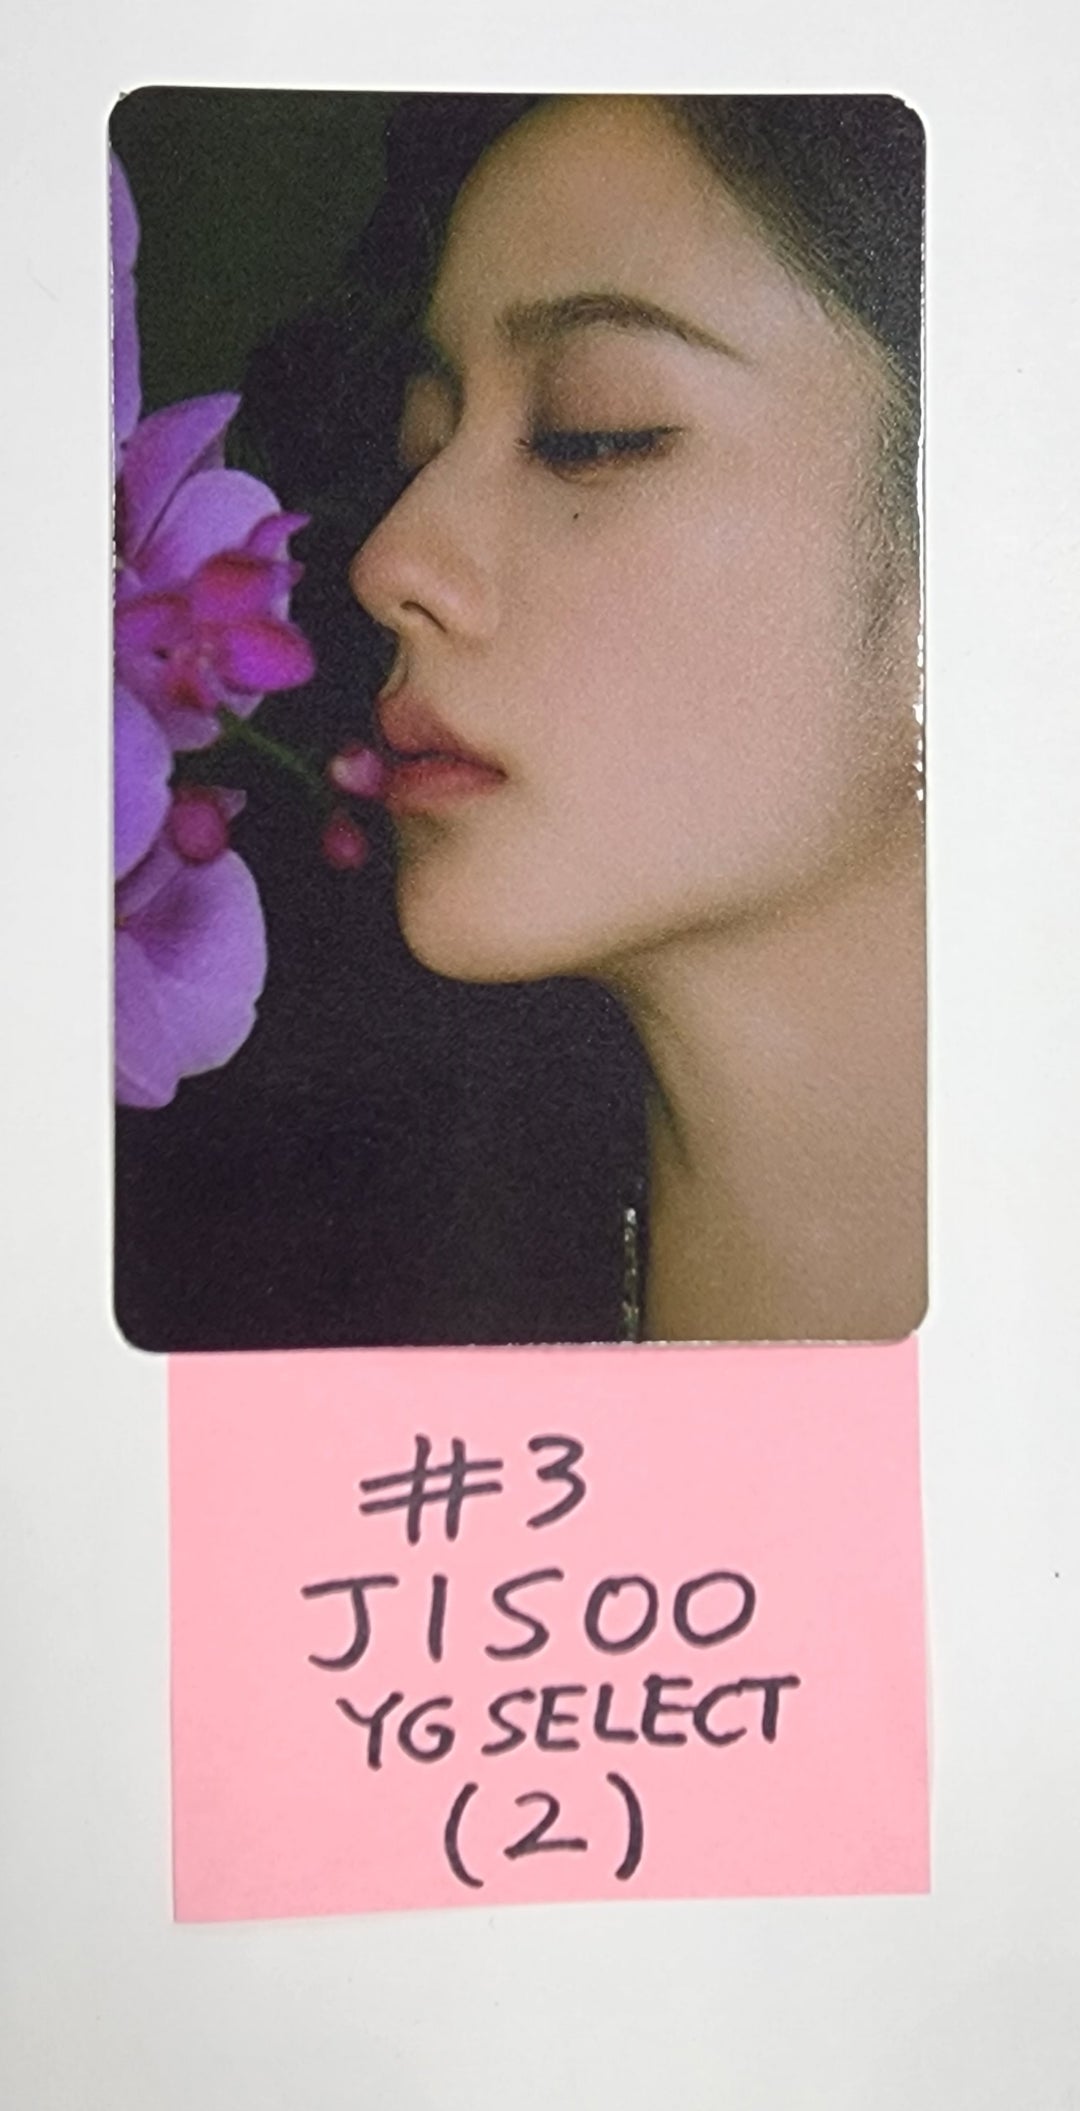 JISOO (Of Black Pink) "ME" - YG Select Pre-Order Benefit Photocard Round 2